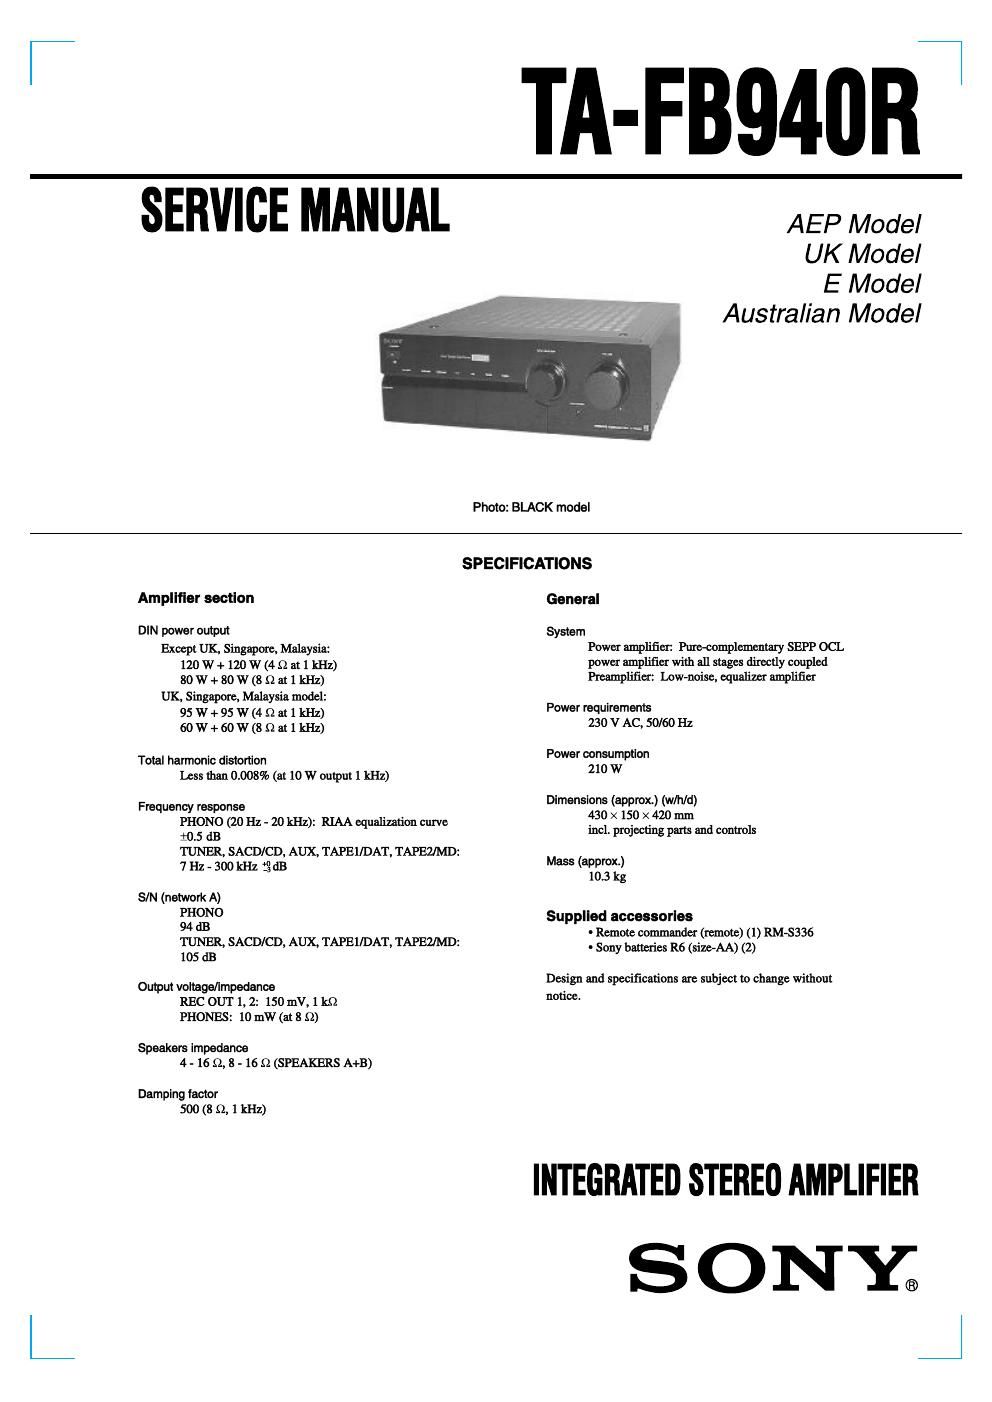 sony ta fb 940r service manual